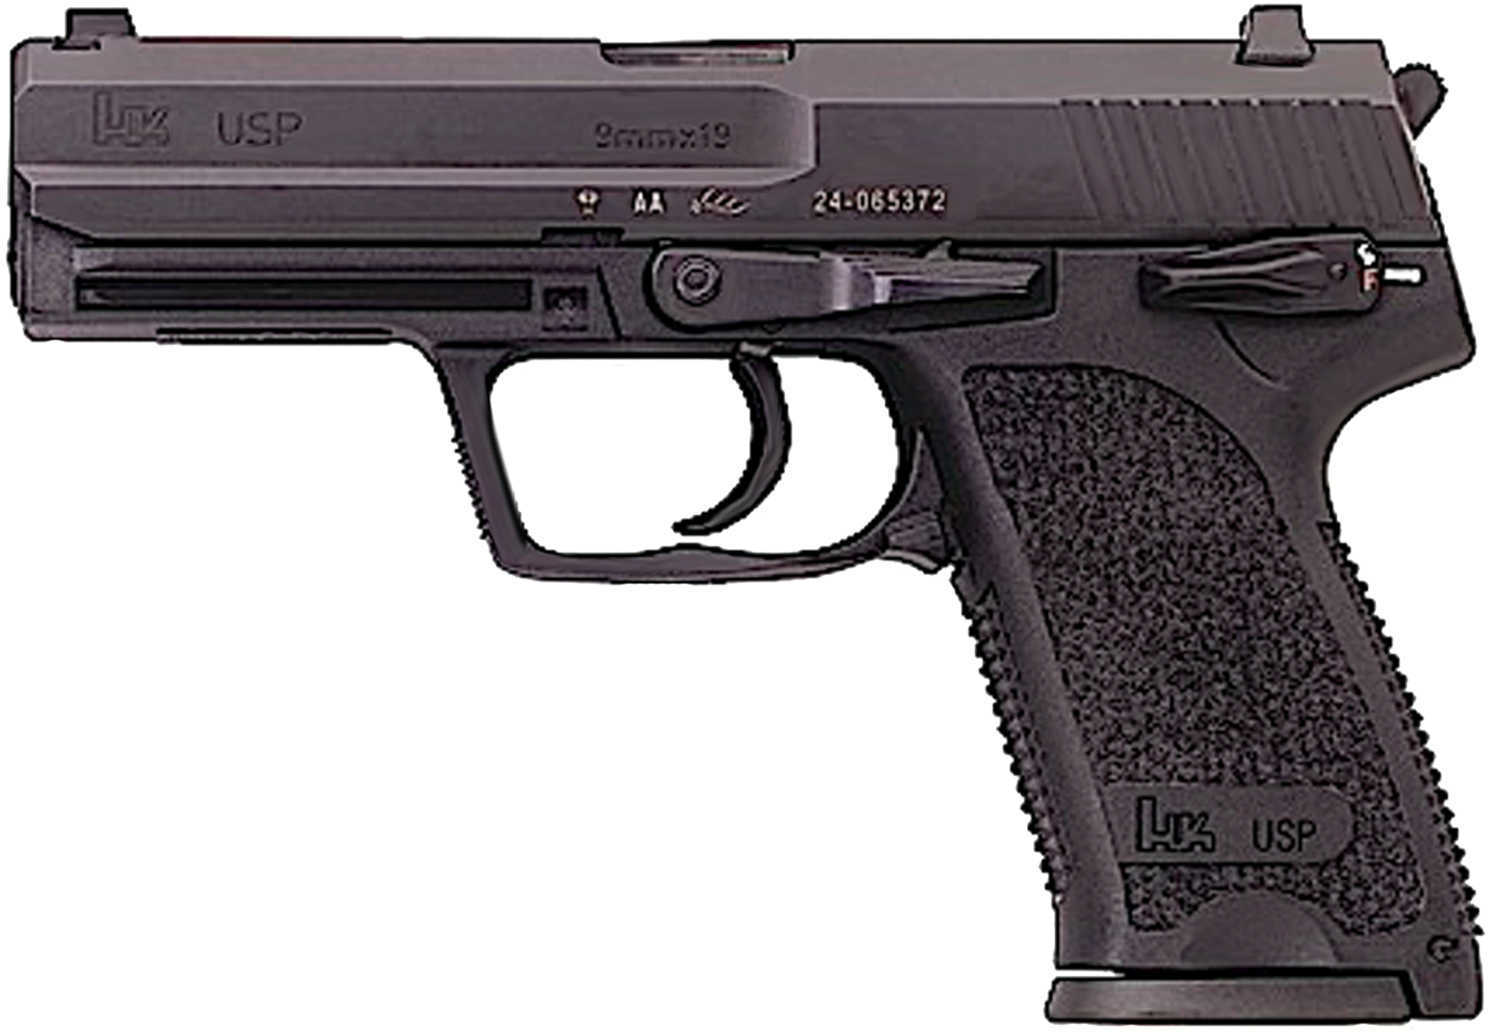 Heckler & Koch USP9 V7 9mm Luger 4.25" Barrel 10 Round Synthetic Grips Black Finish Semi Auto Pistol 709007A5